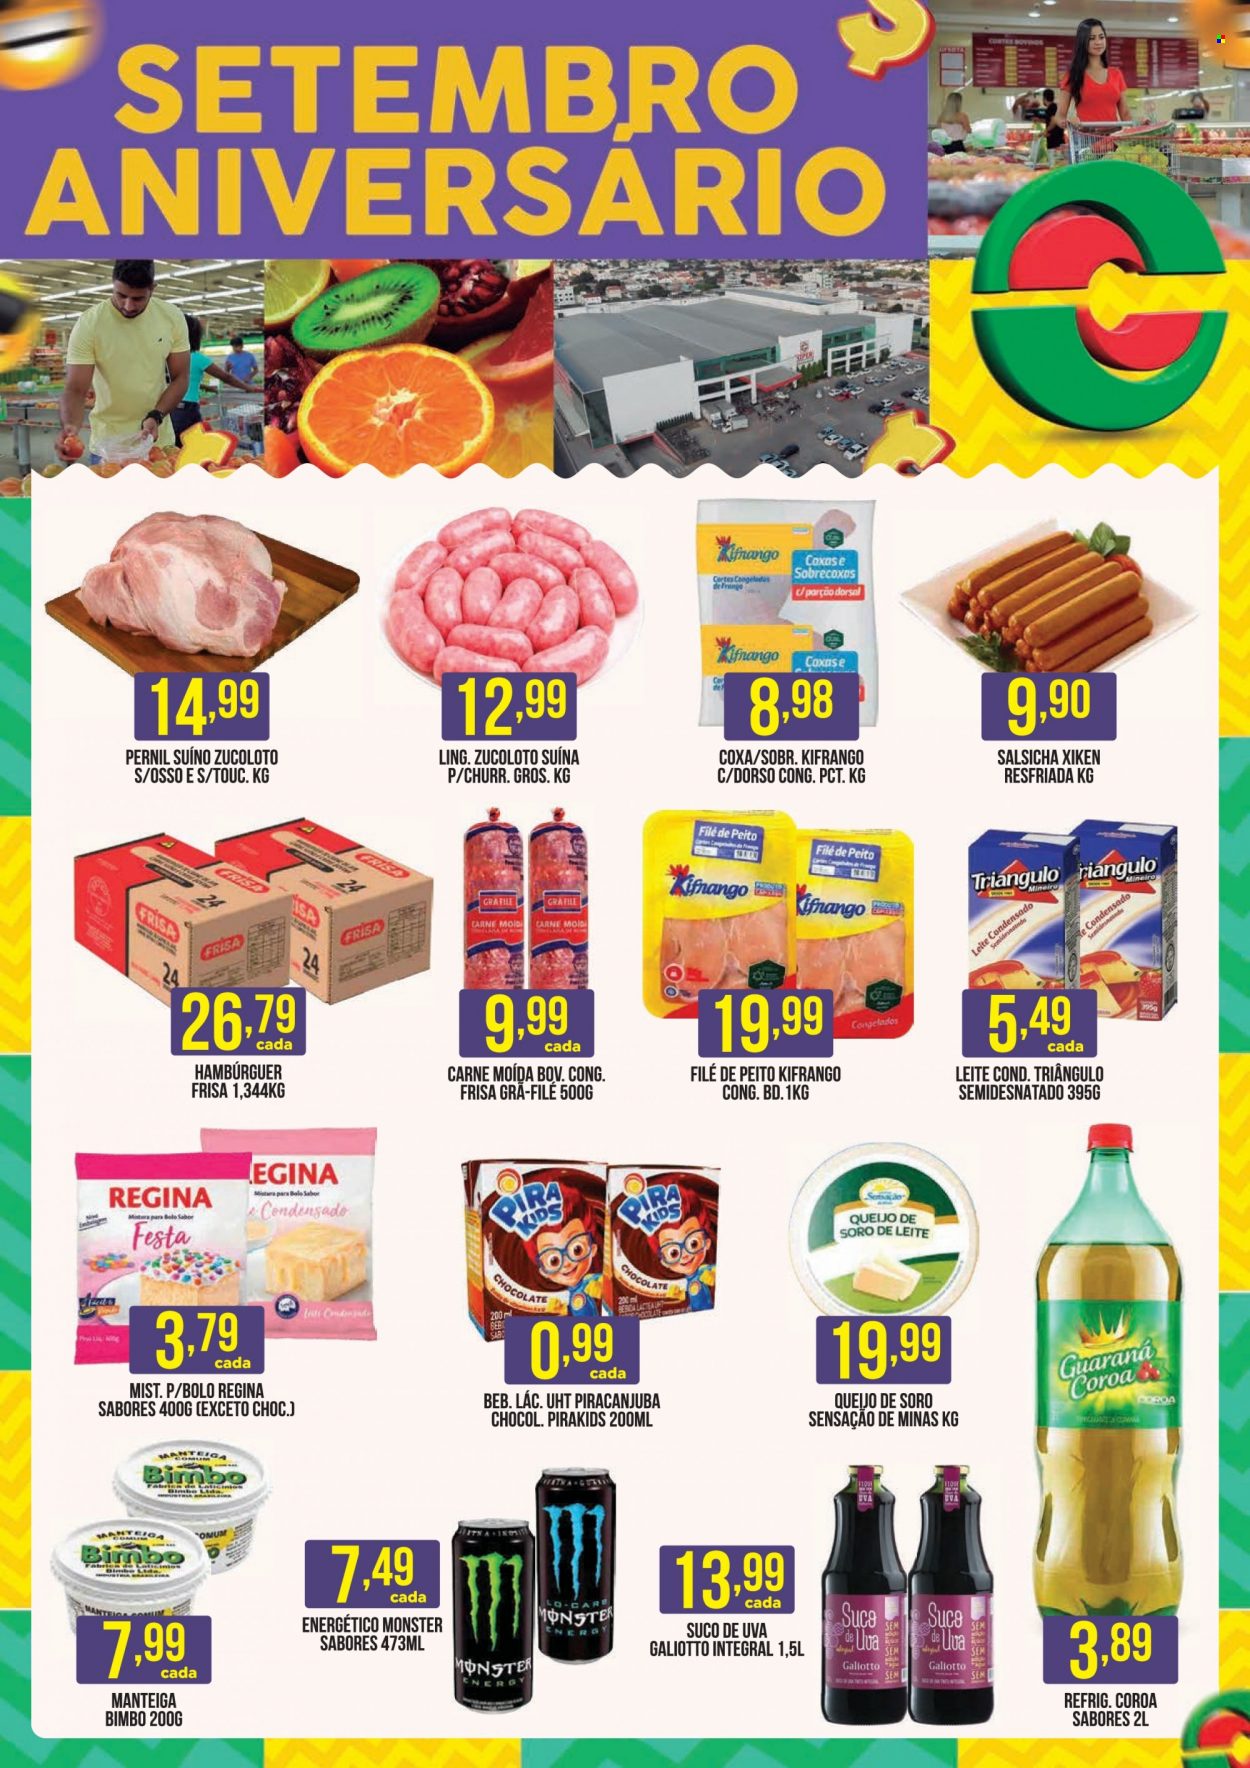 Encarte Casagrande Supermercados  - 19.09.2022 - 02.10.2022.